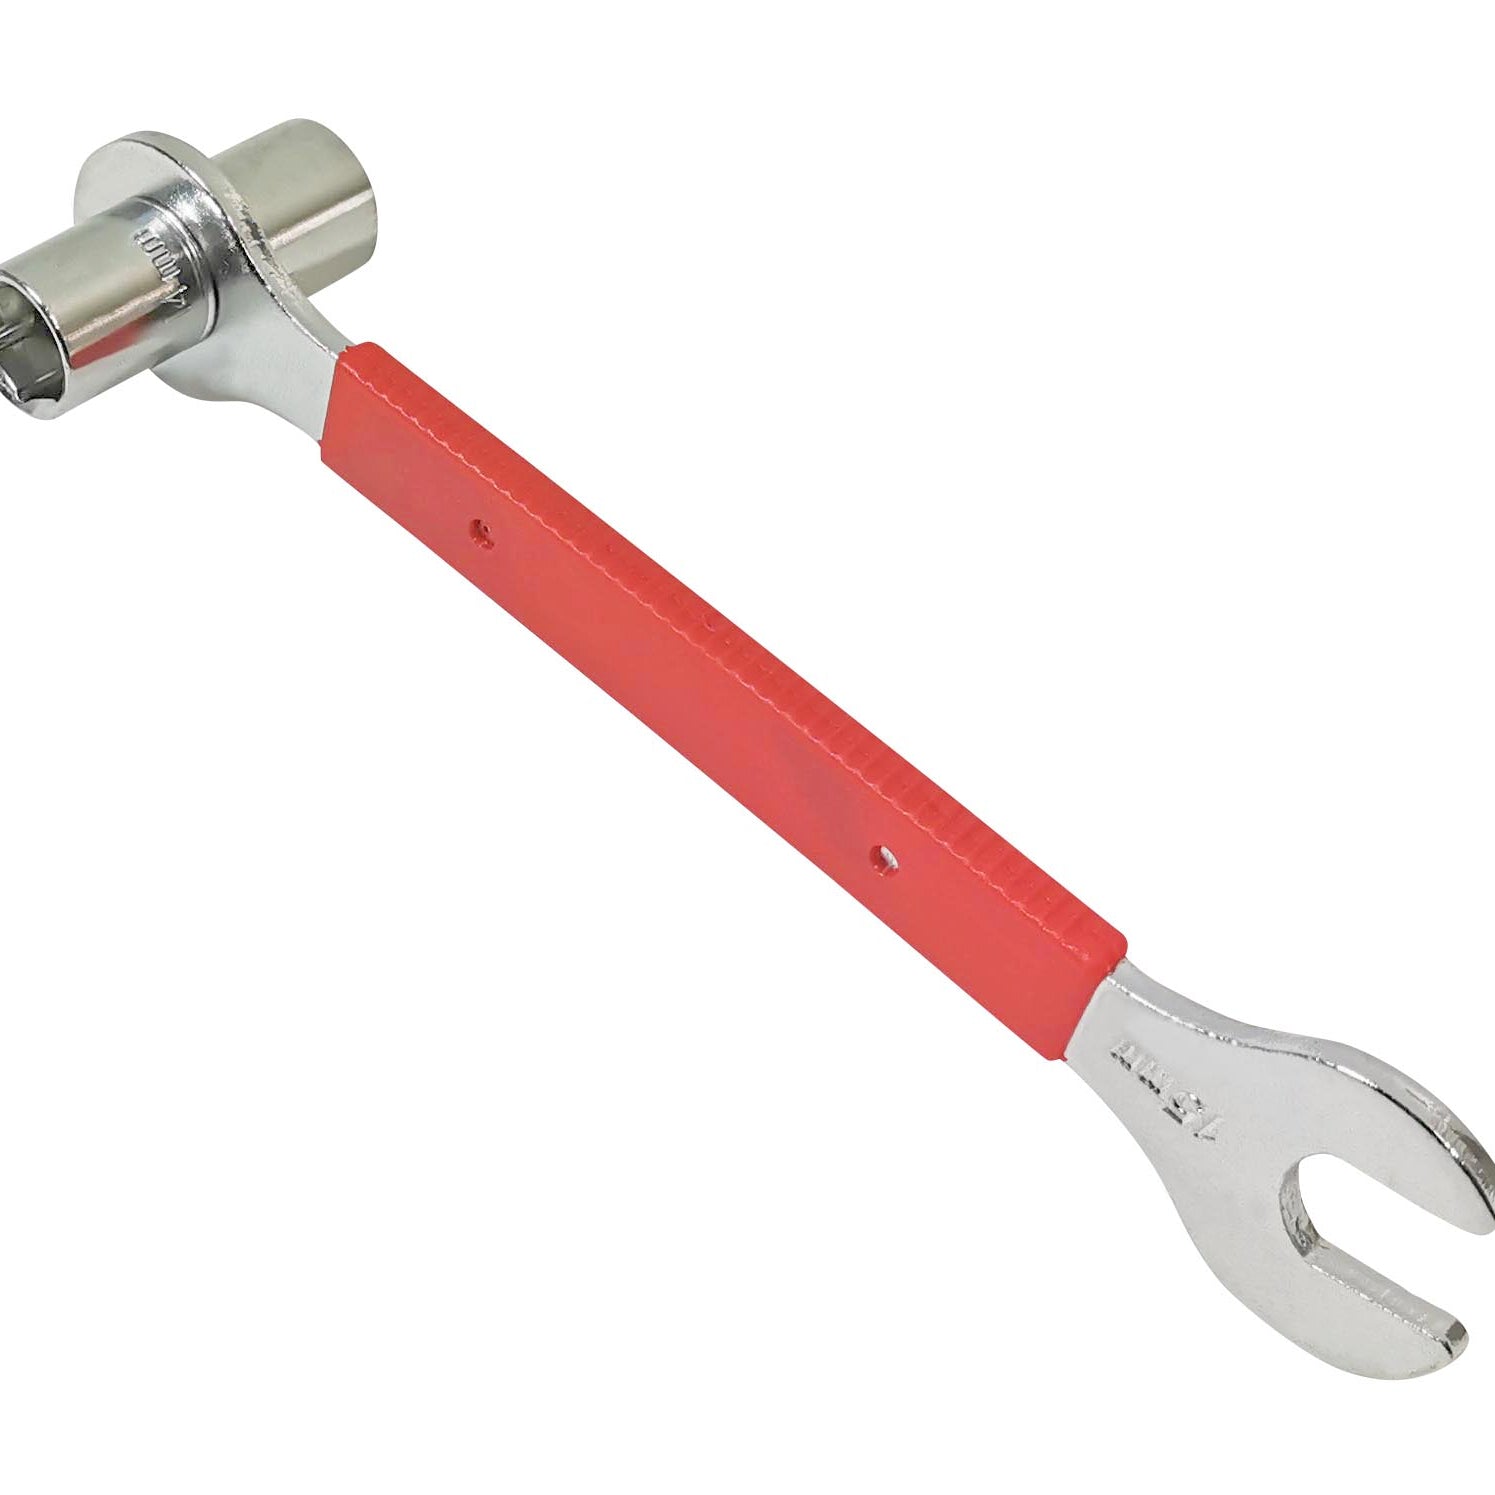 Pedalschlüssel 15mm Konusschlüssel Kurbelschrauben Schlüssel Red Loon Tretlager